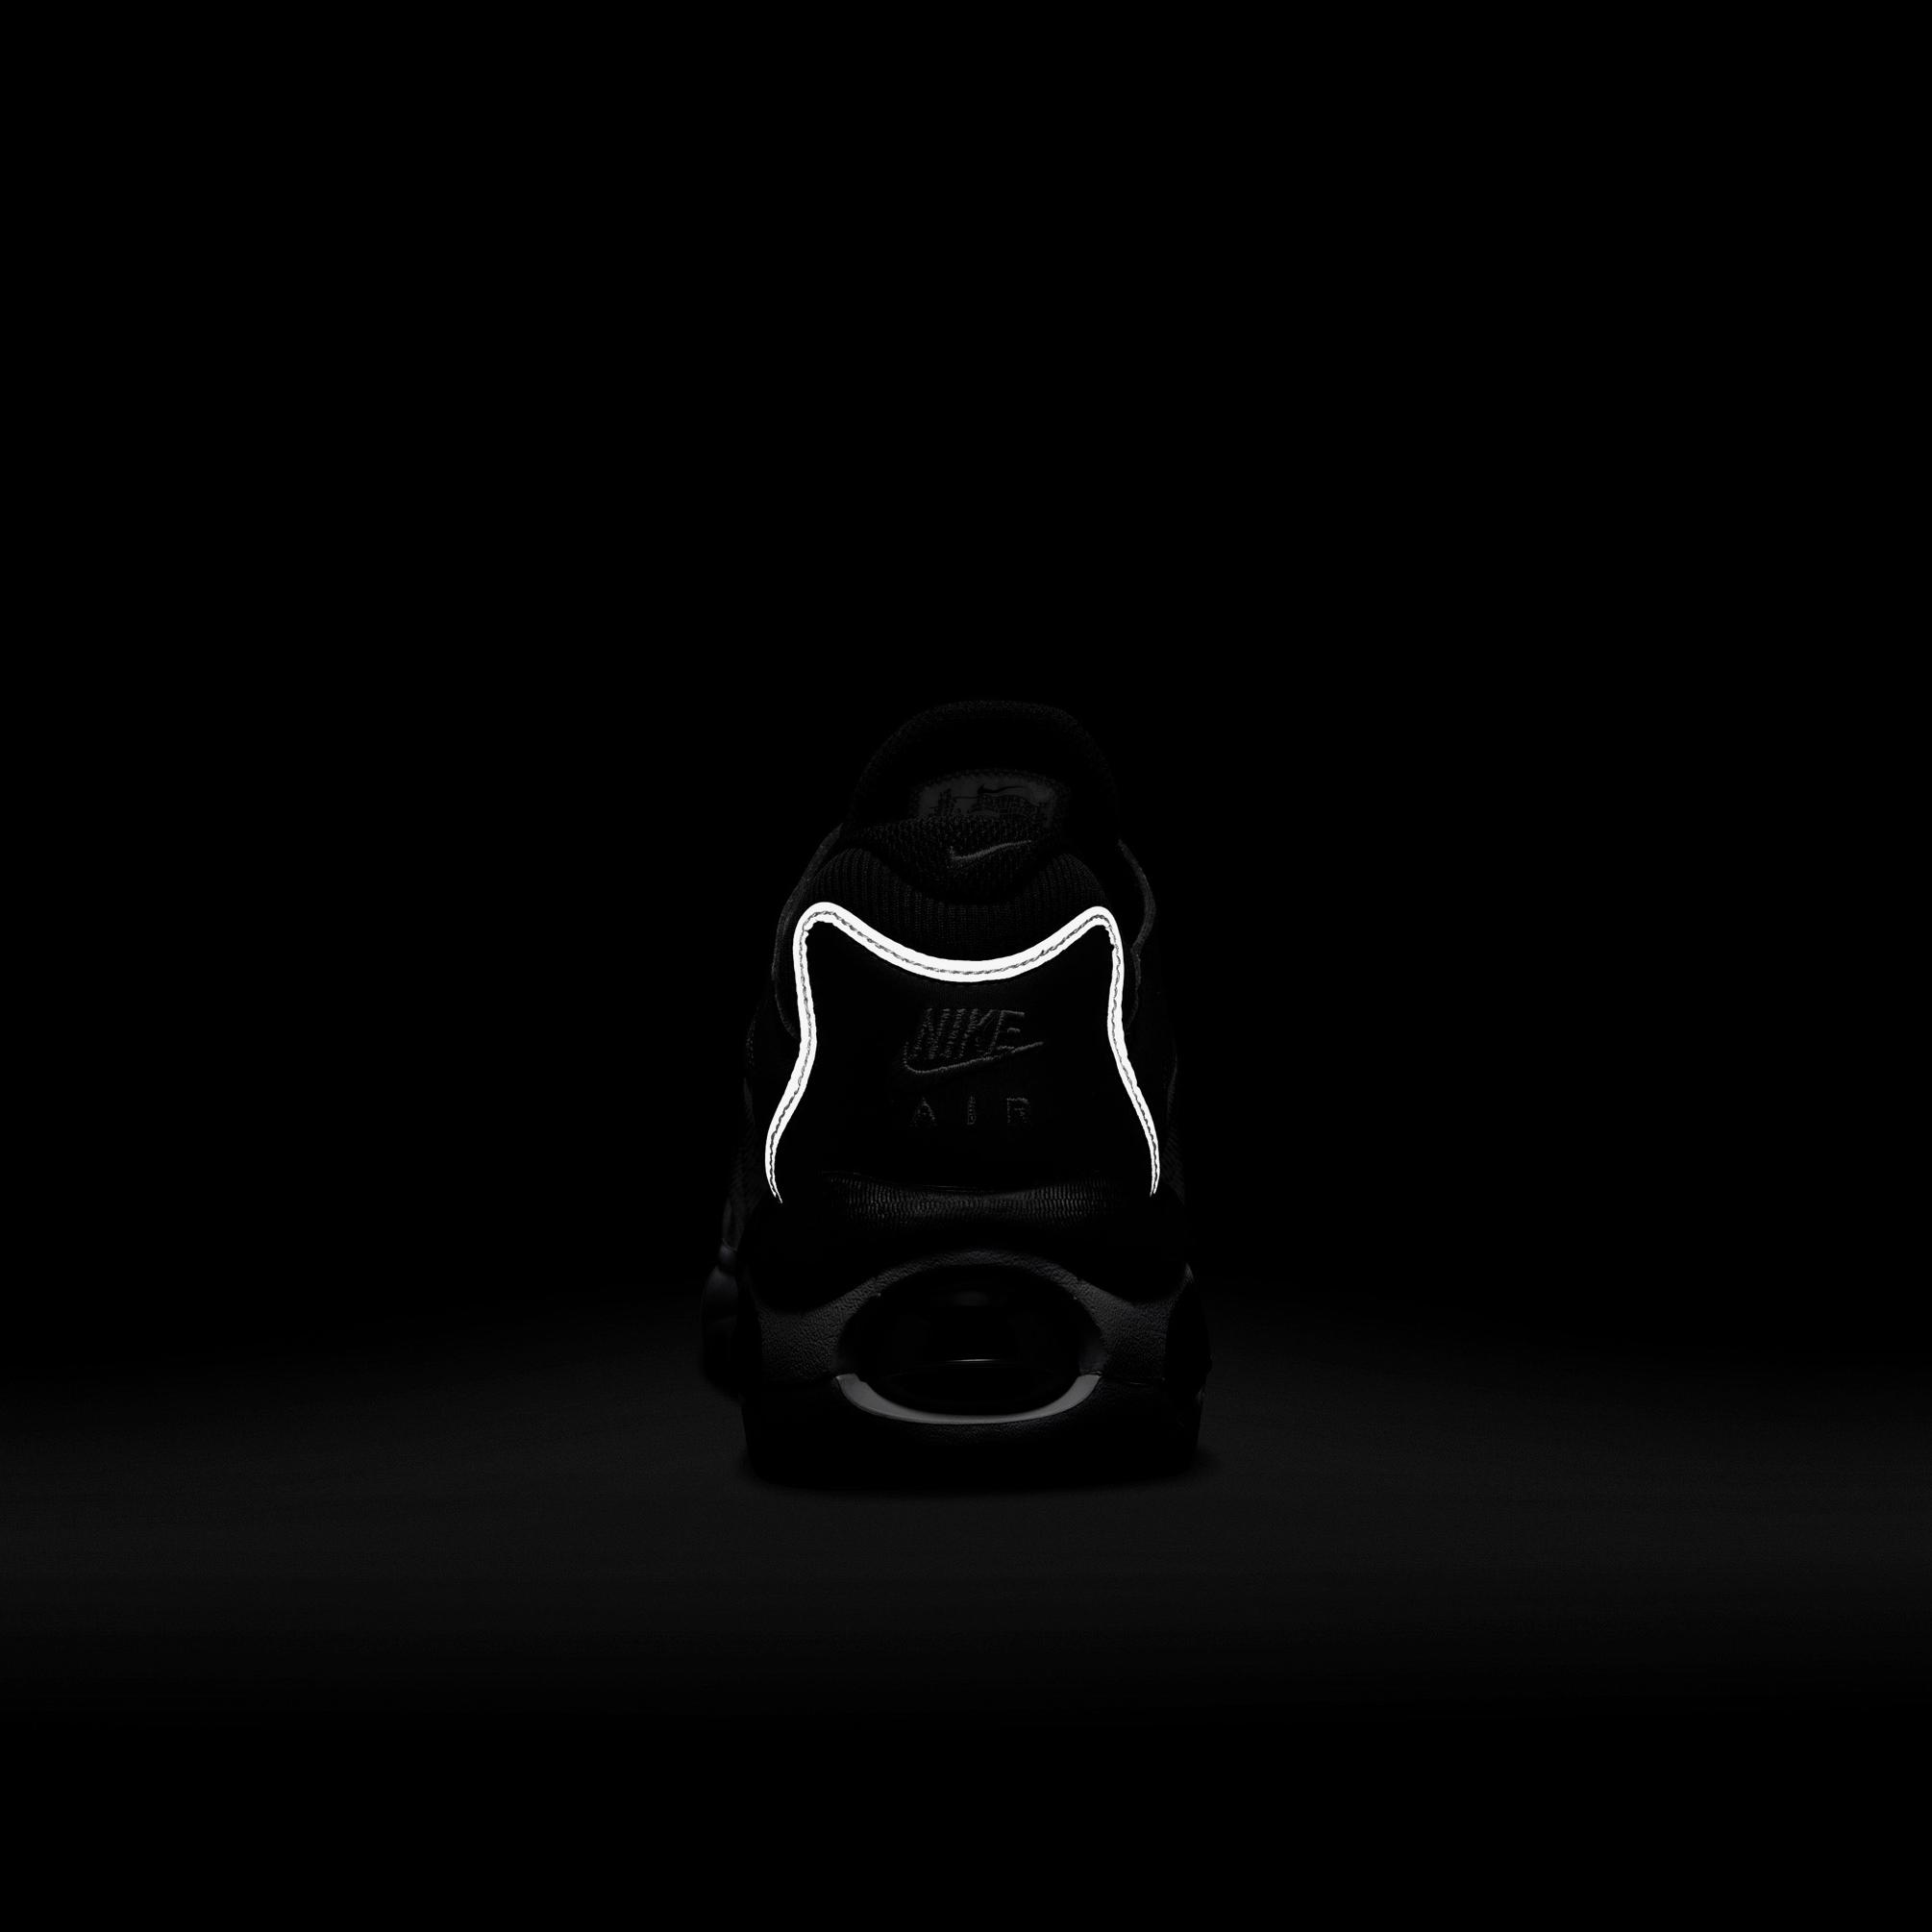  Nike Air Max Erkek Siyah/Gri Spor Ayakkabı